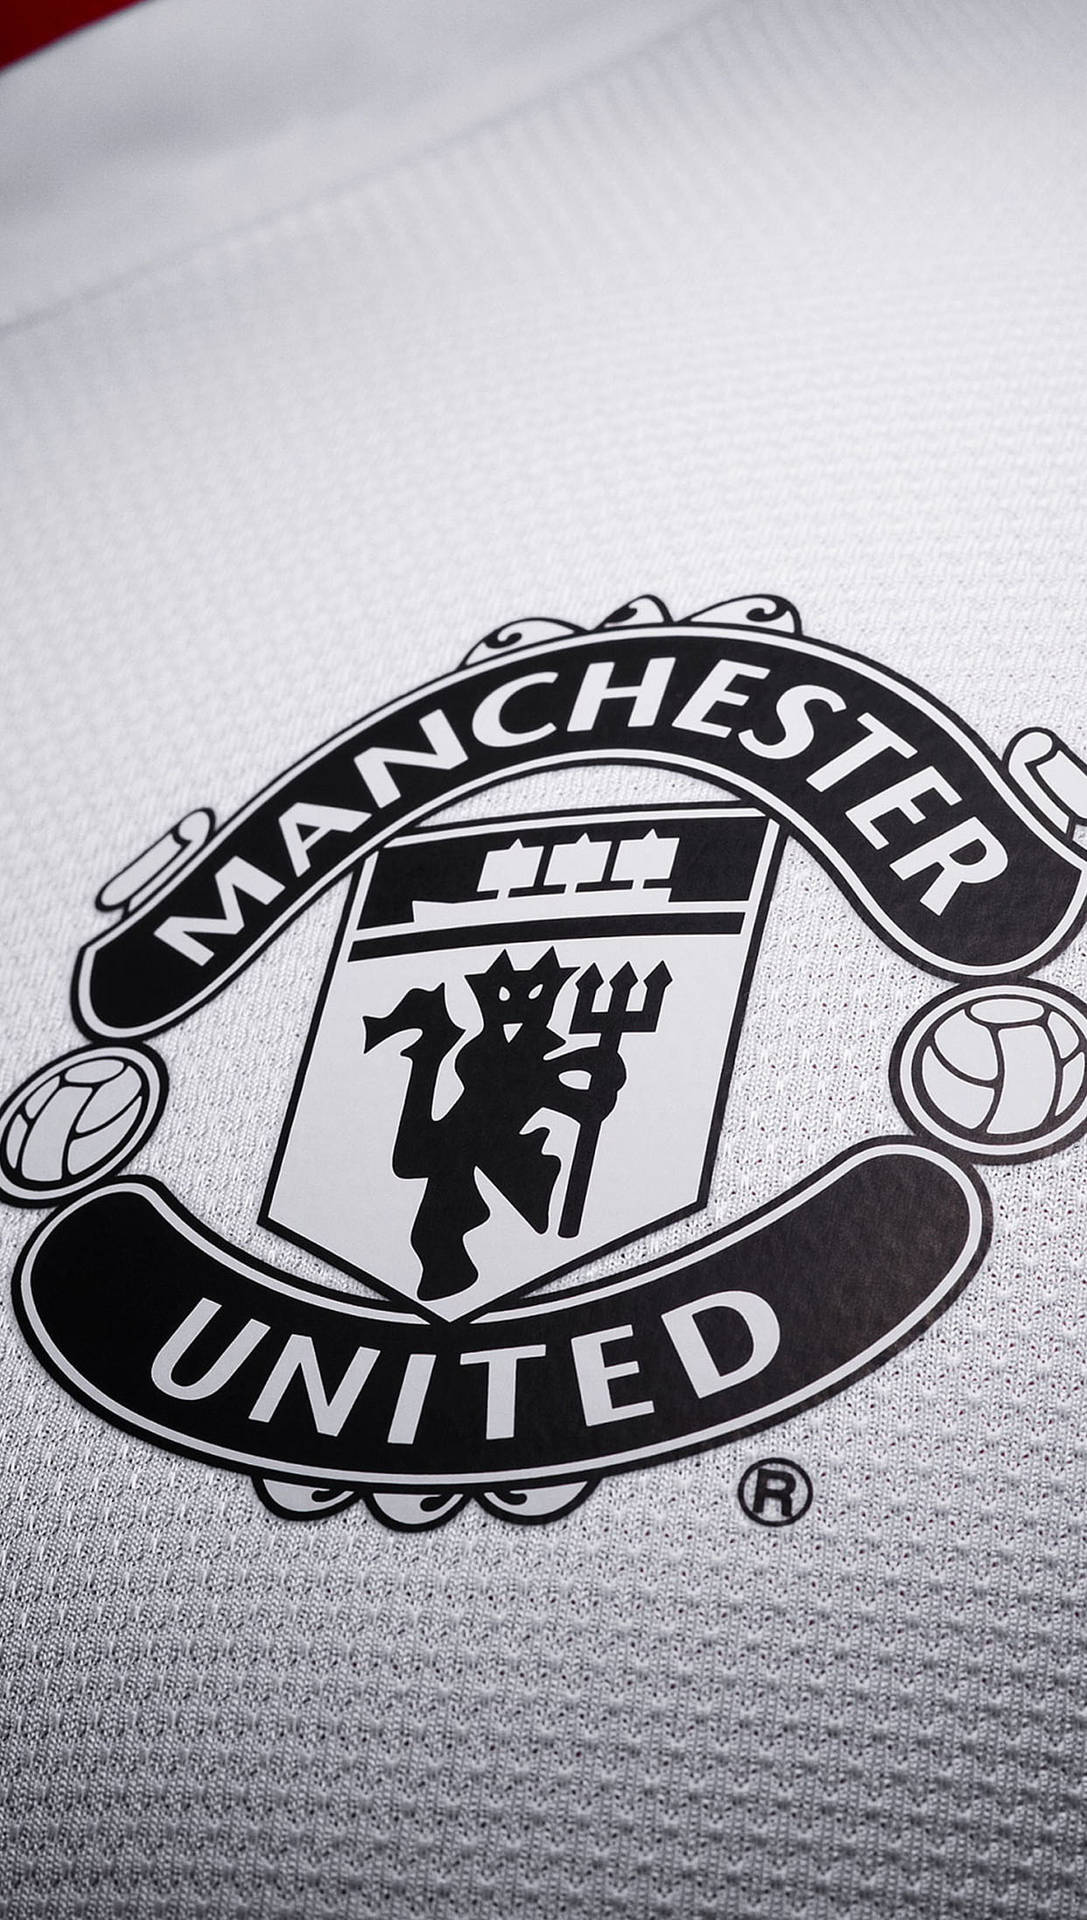 Shirt Design Of Manchester United Mobile